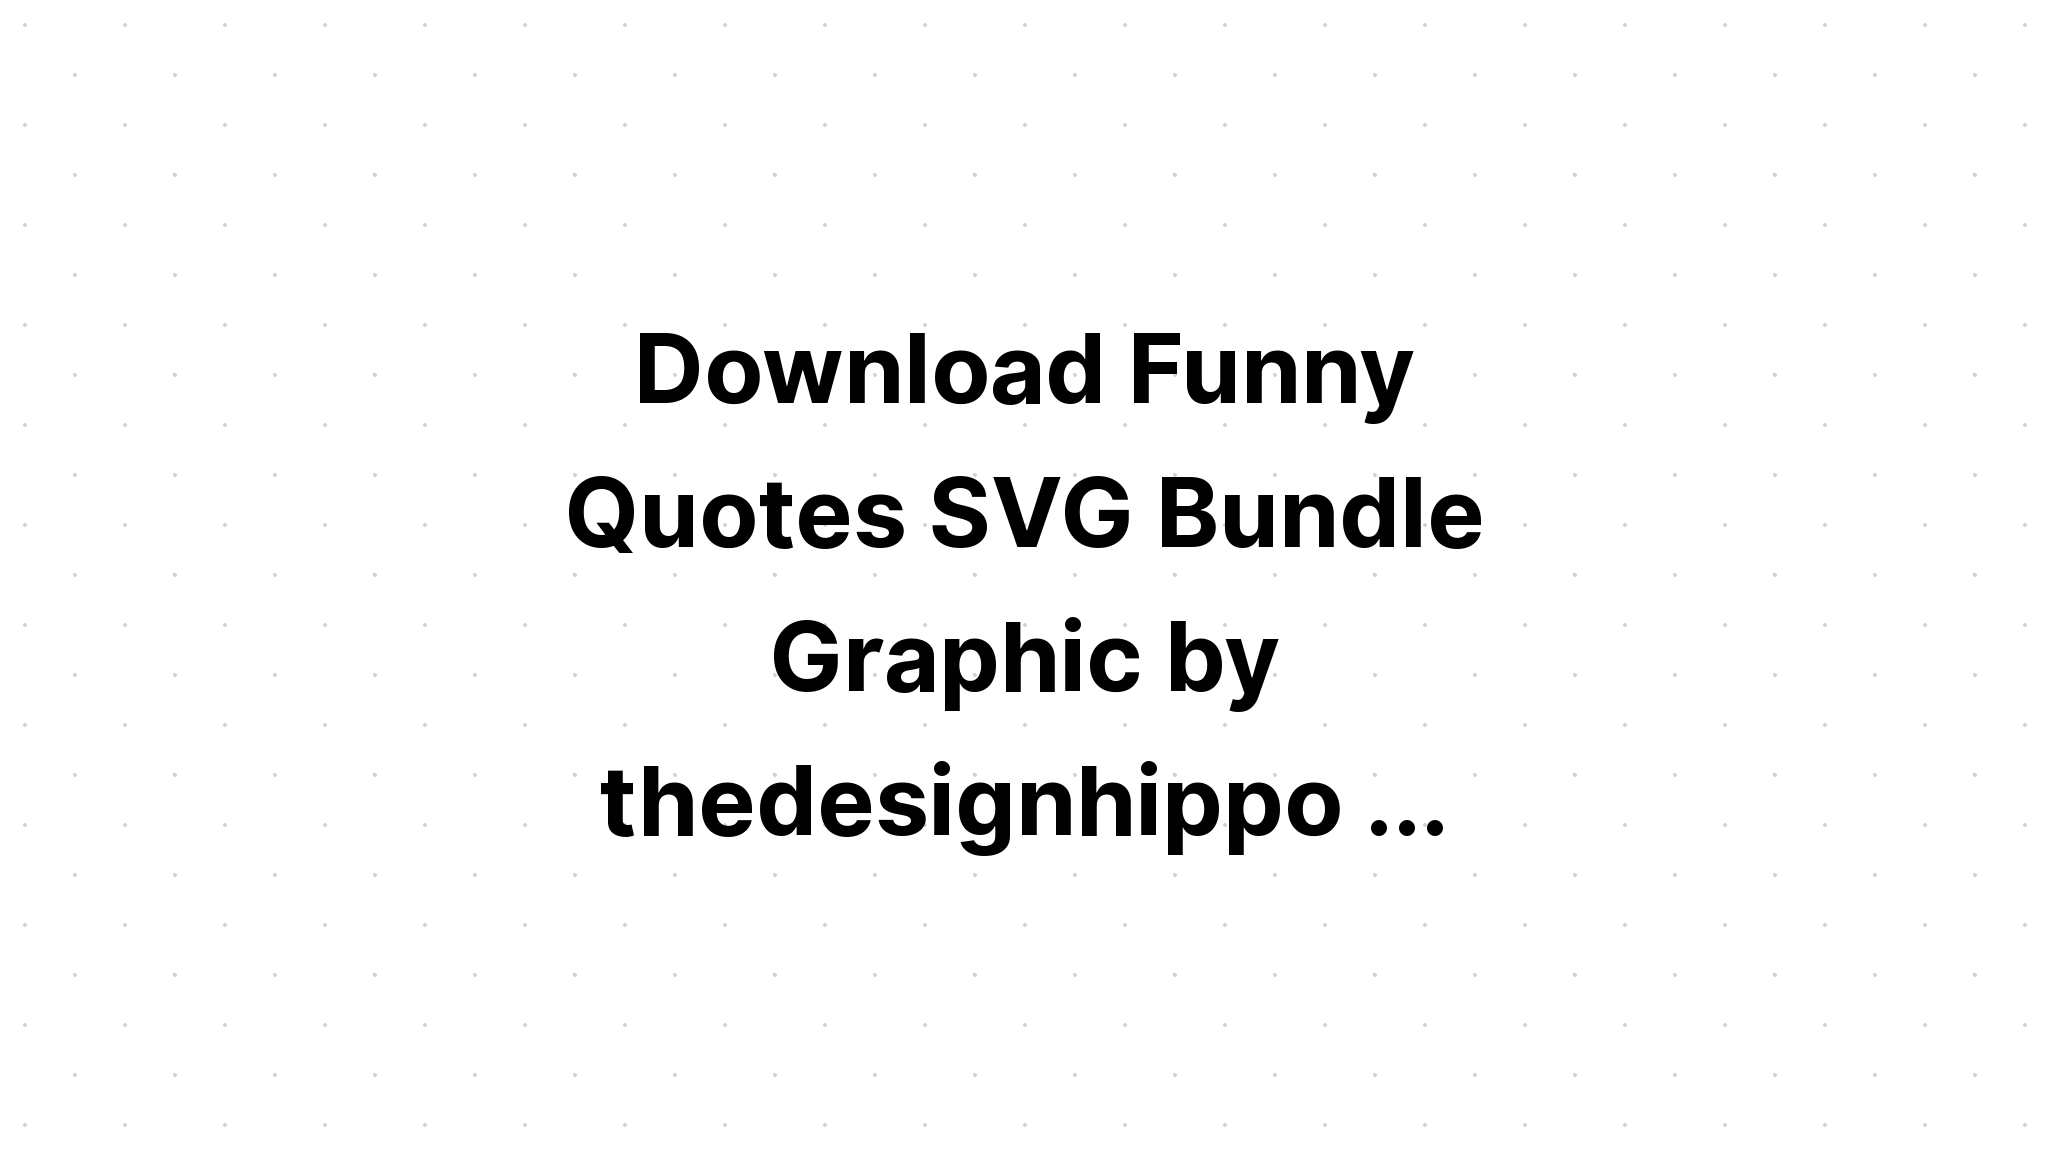 Download 10 Funny Quotes Bundle SVG File